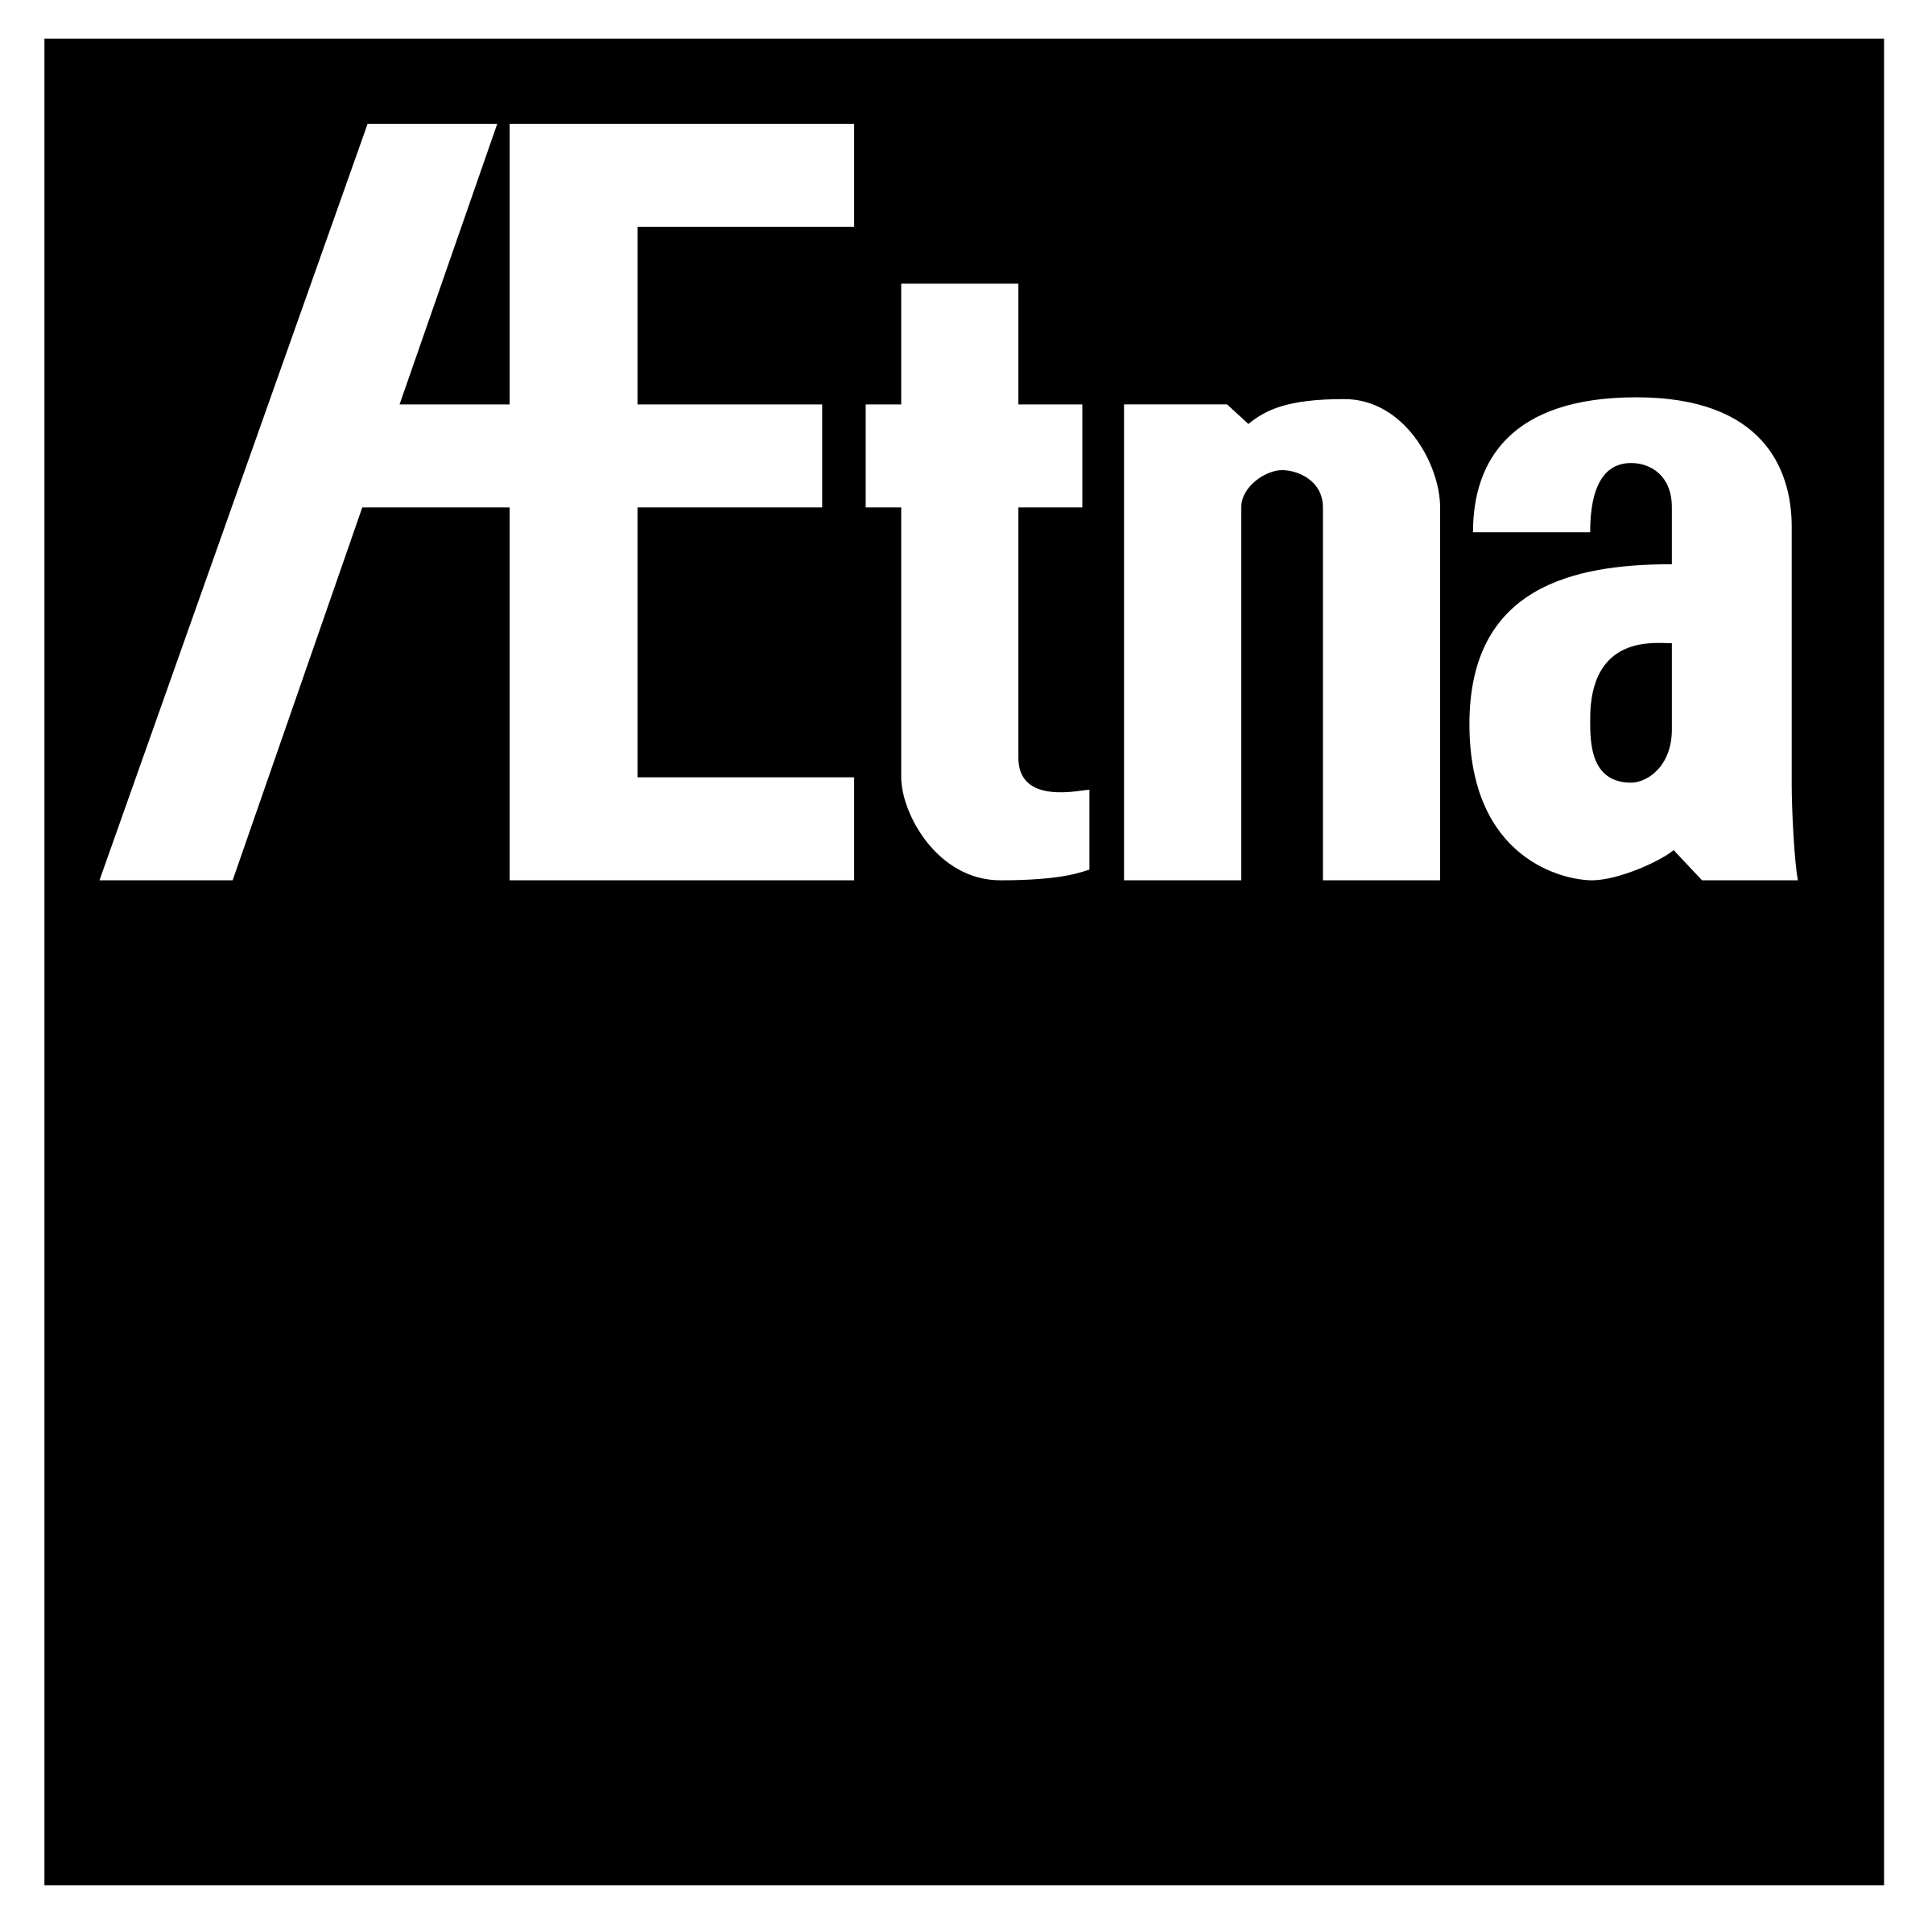 AEtna Logo PNG Transparent & SVG Vector.